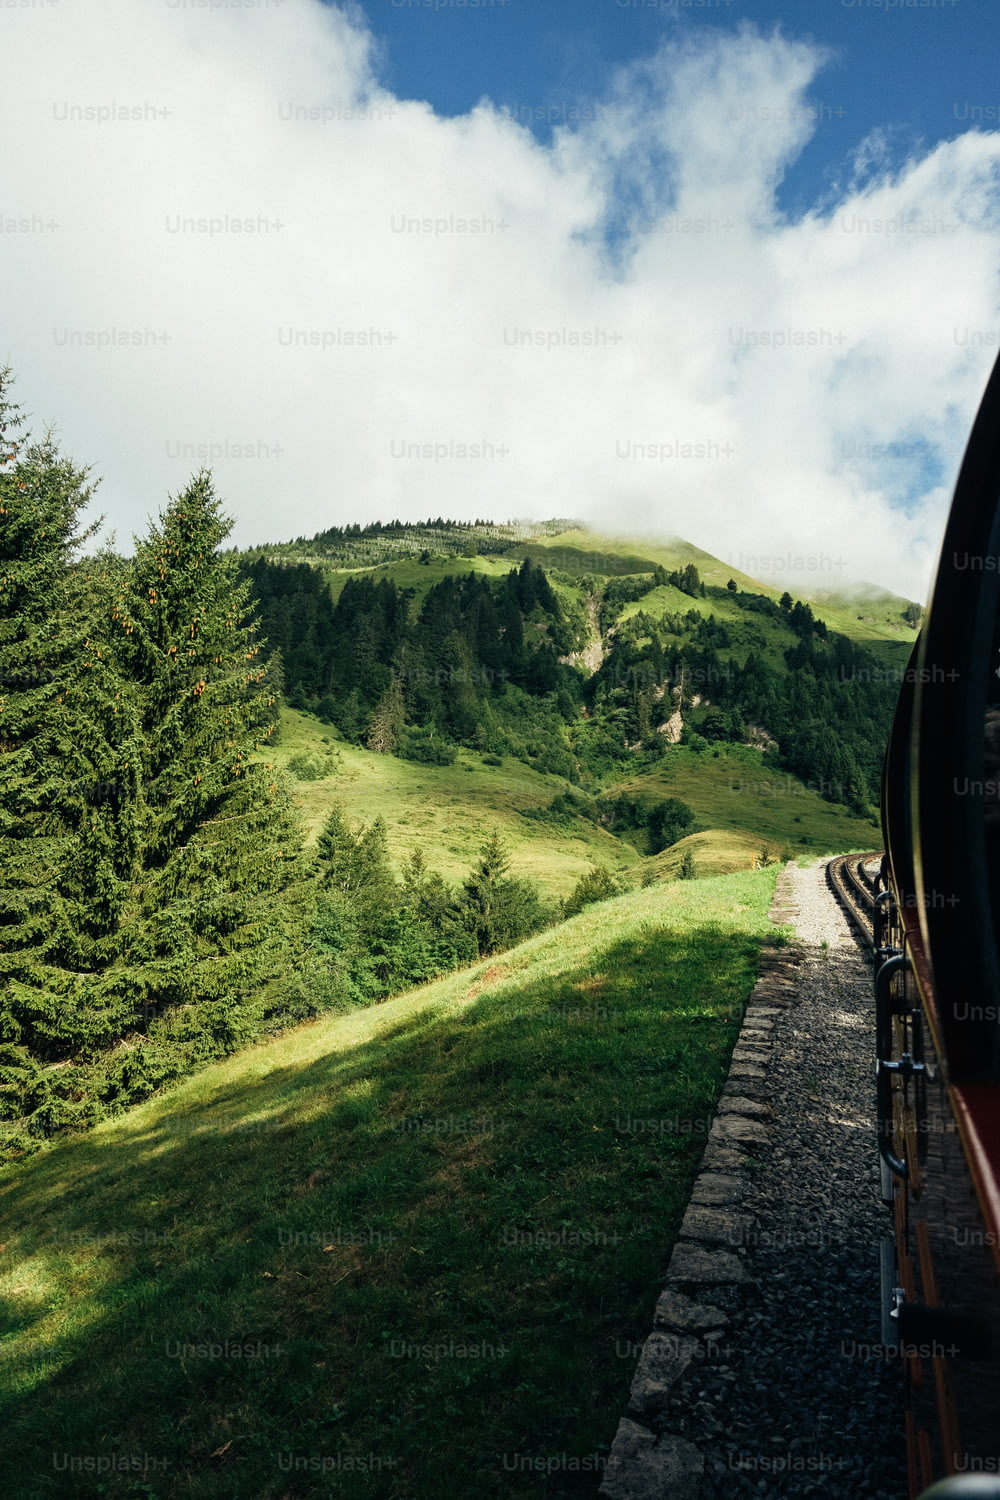 a train traveling through a lush green countryside